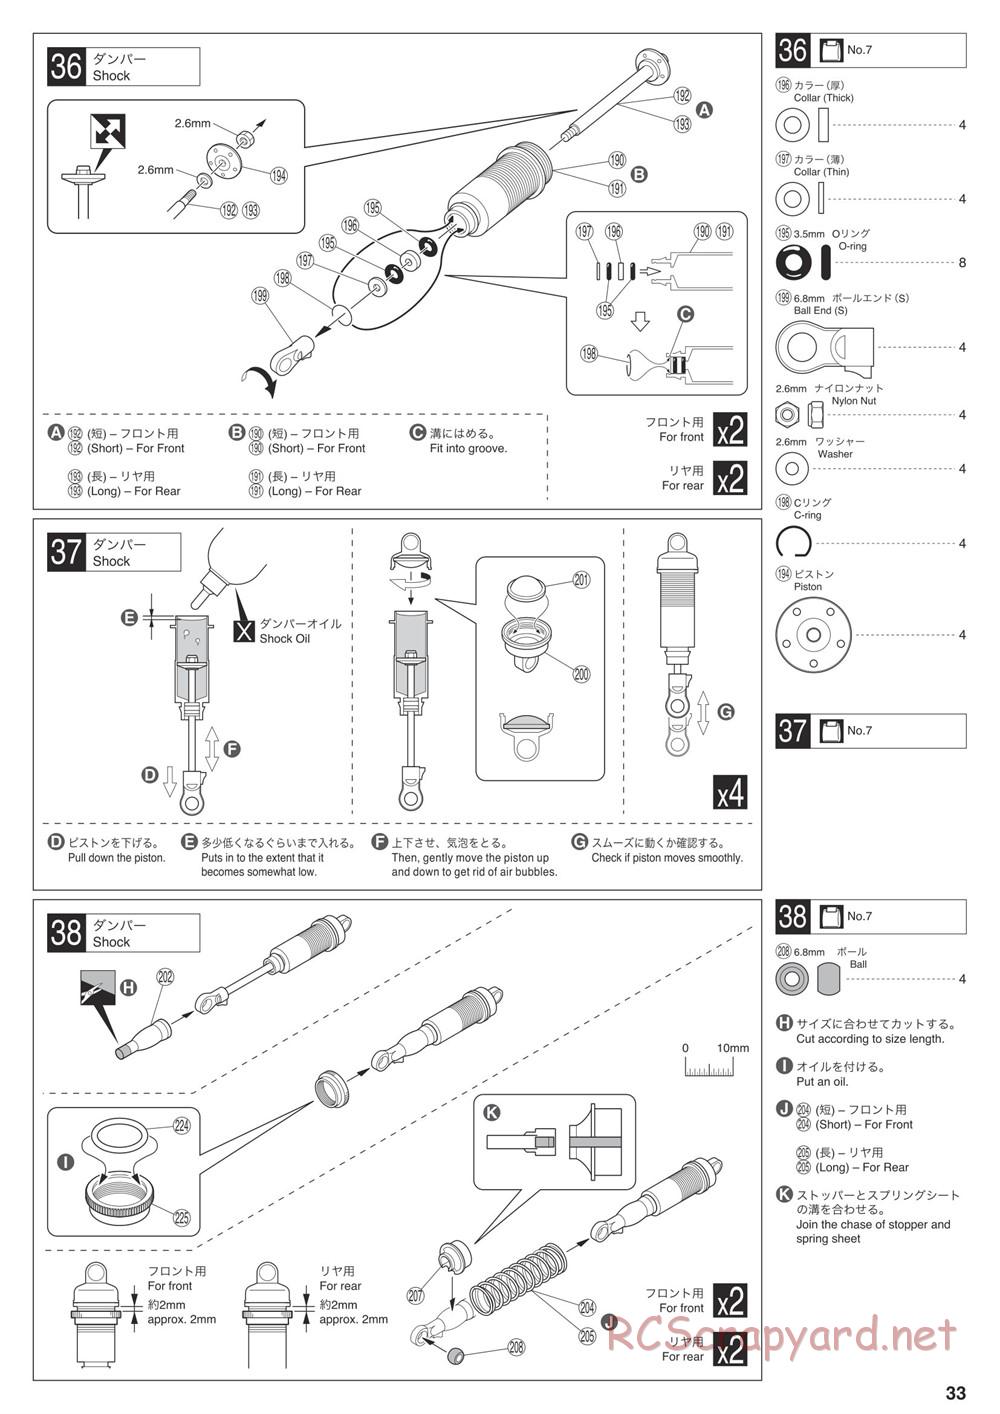 Kyosho - Inferno MP9e TKI4 - Manual - Page 33